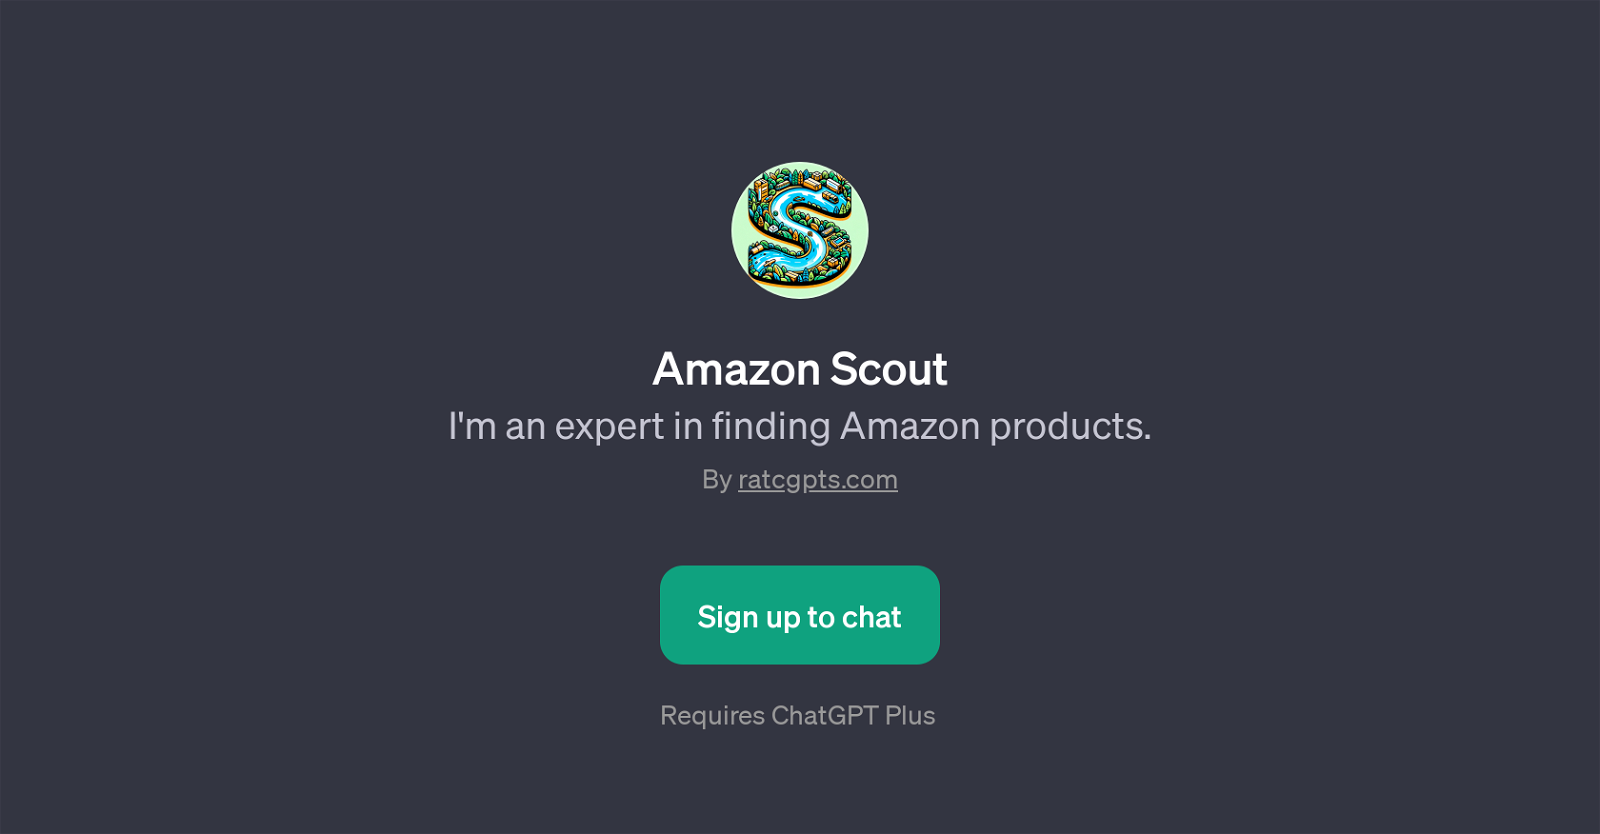 Amazon Scout website